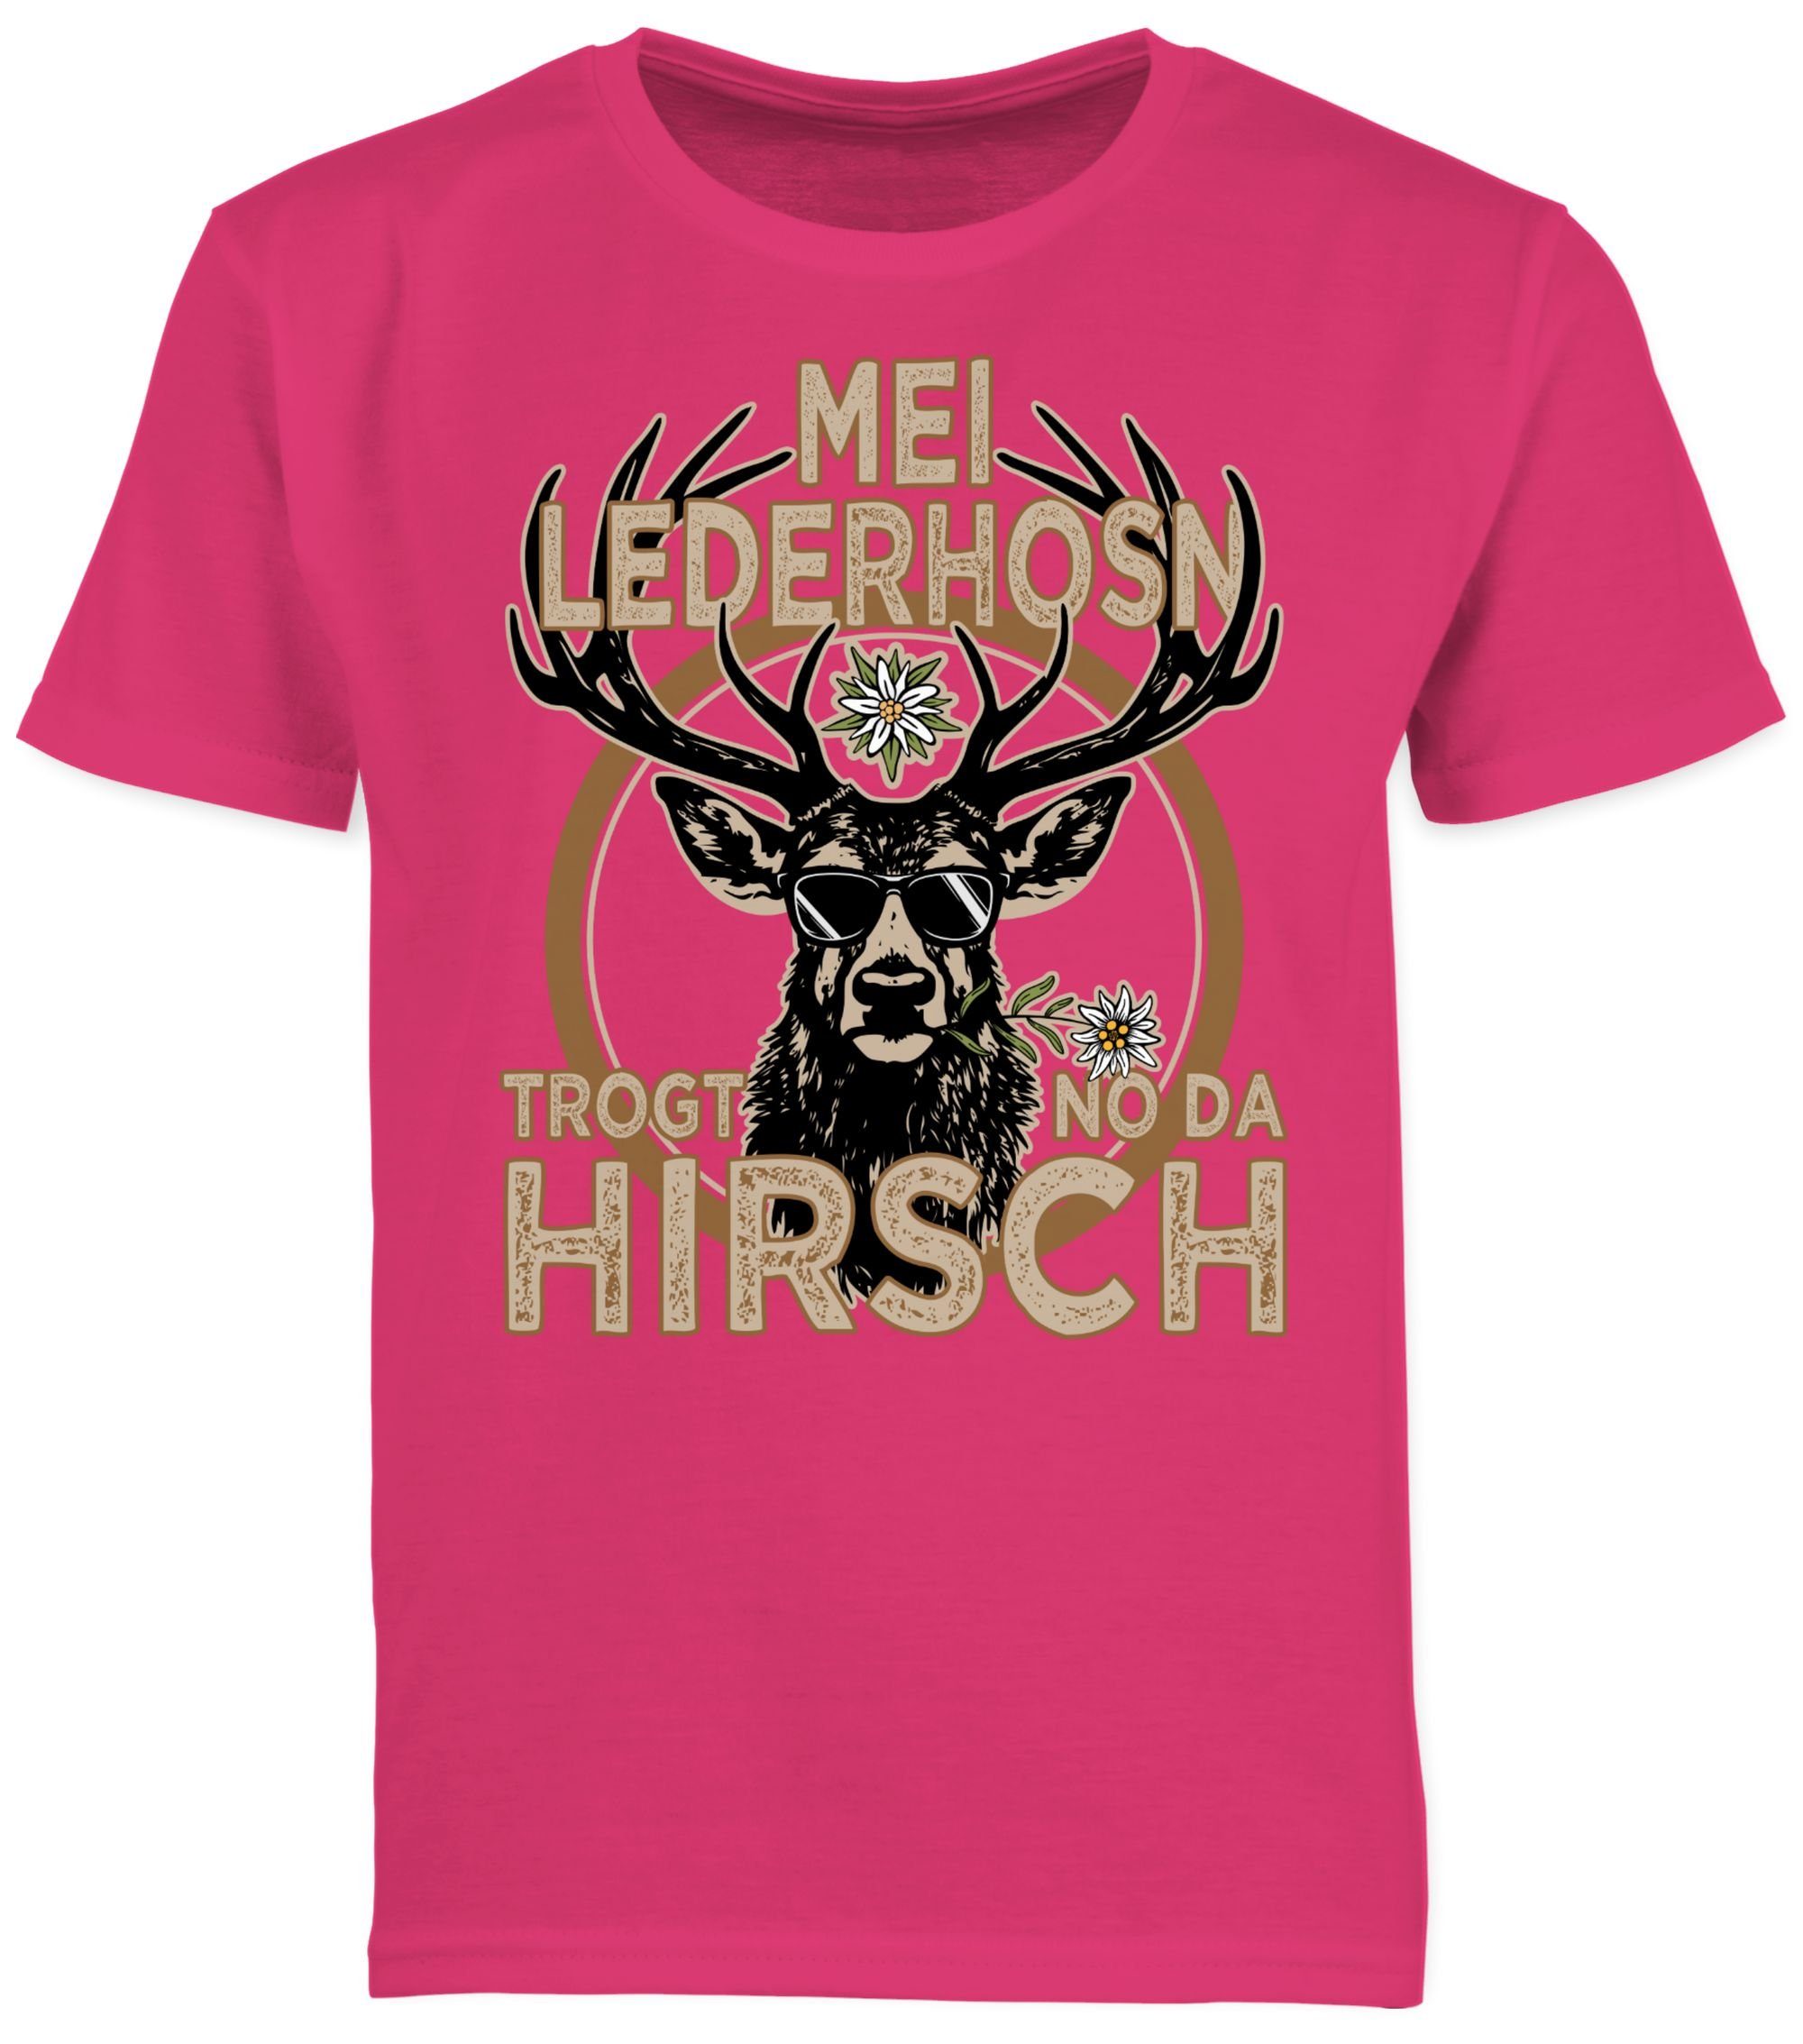 der Fuchsia Kinder Trägt Lederhose Mode Spruch Outfit für Outfit Hirsch 03 Oktoberfest T-Shirt Shirtracer Trachten